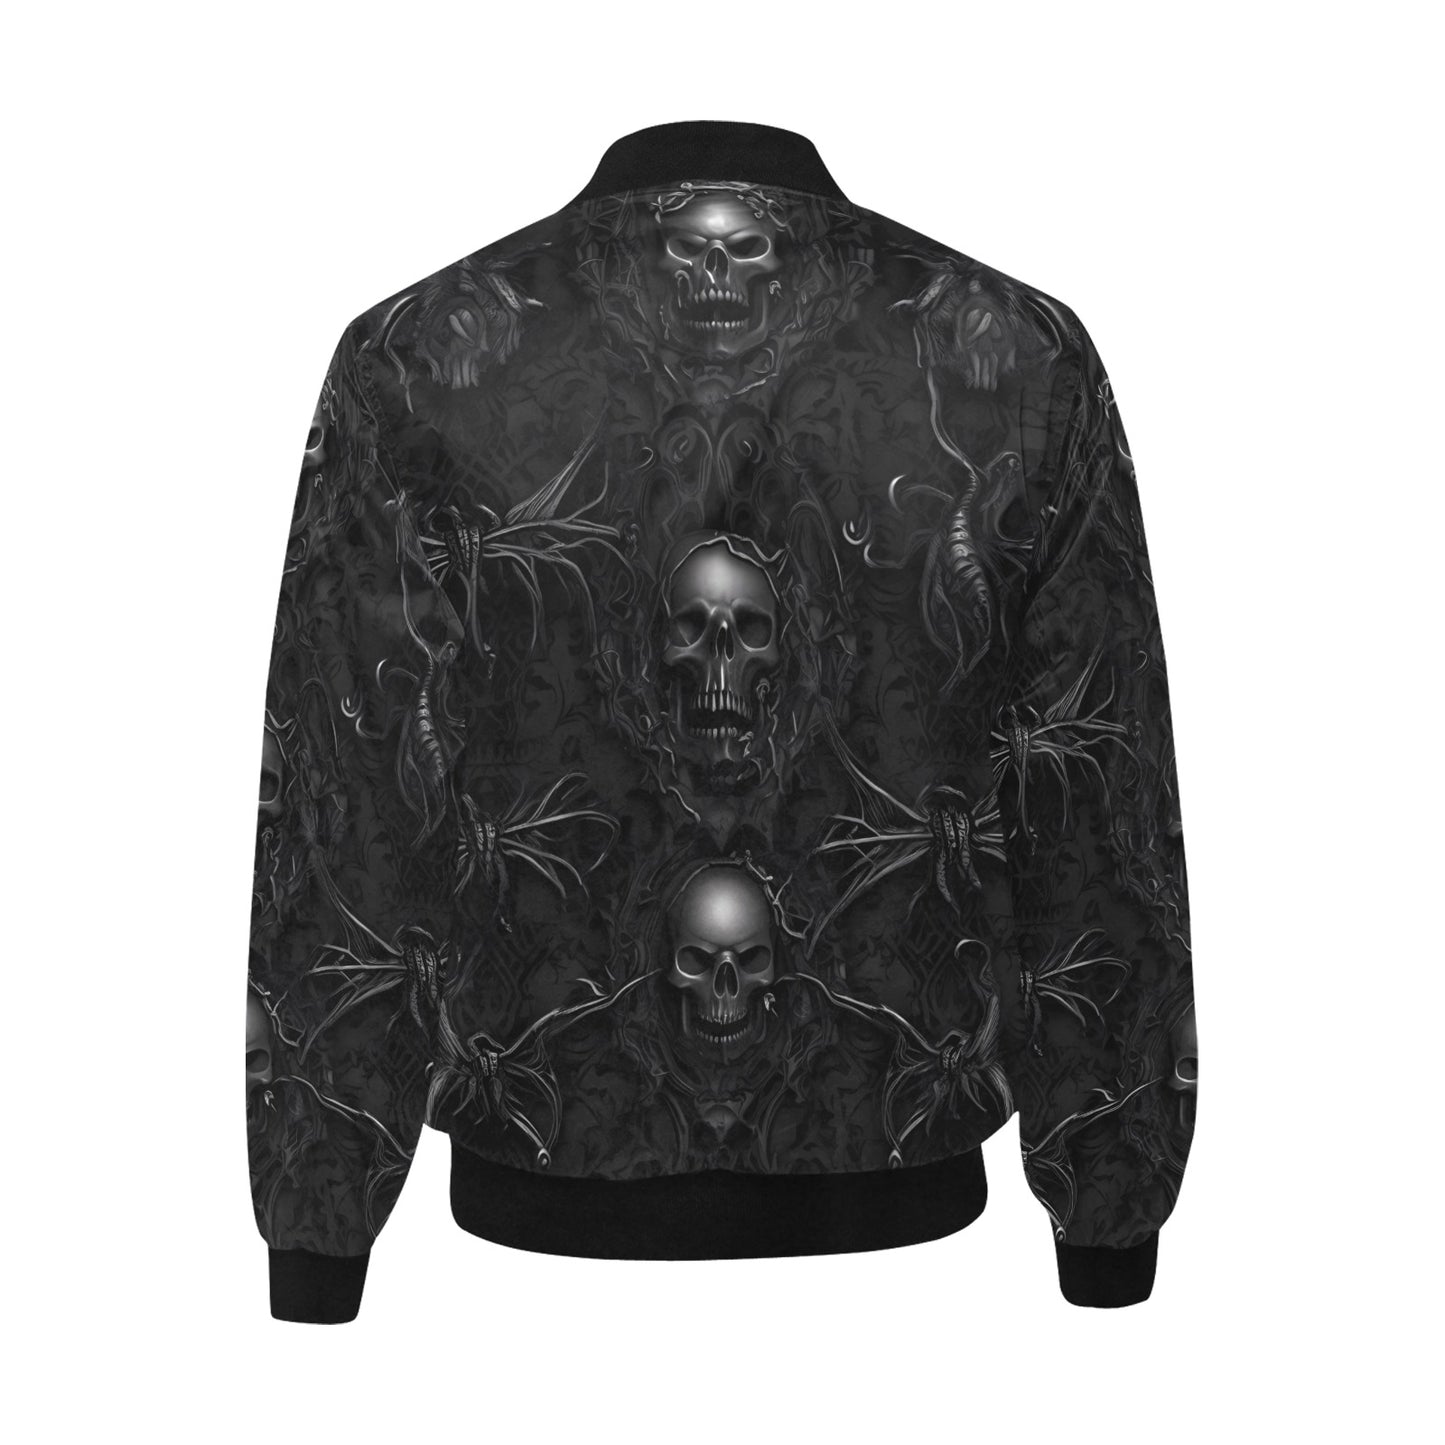 Goth And Skulls Bomber Jacket